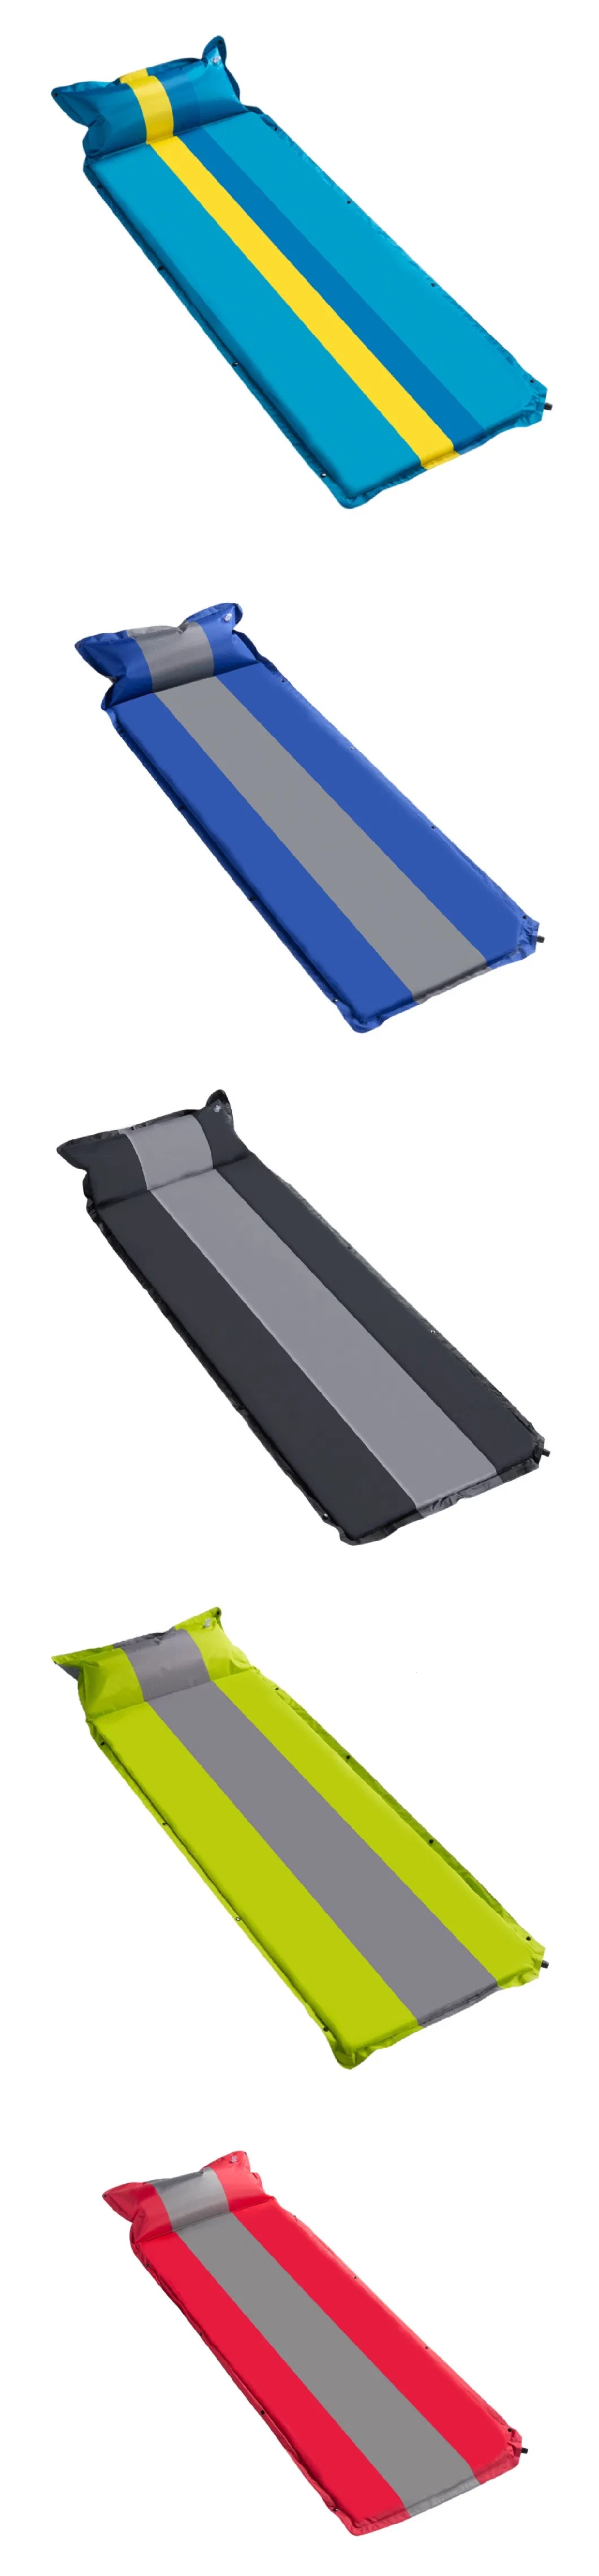 Folding Portable Lightweight TPU Compact Nylon Inflatable Sleeping Pad Outdoor Picnic Mat Self Inflating Air Camping Mattress